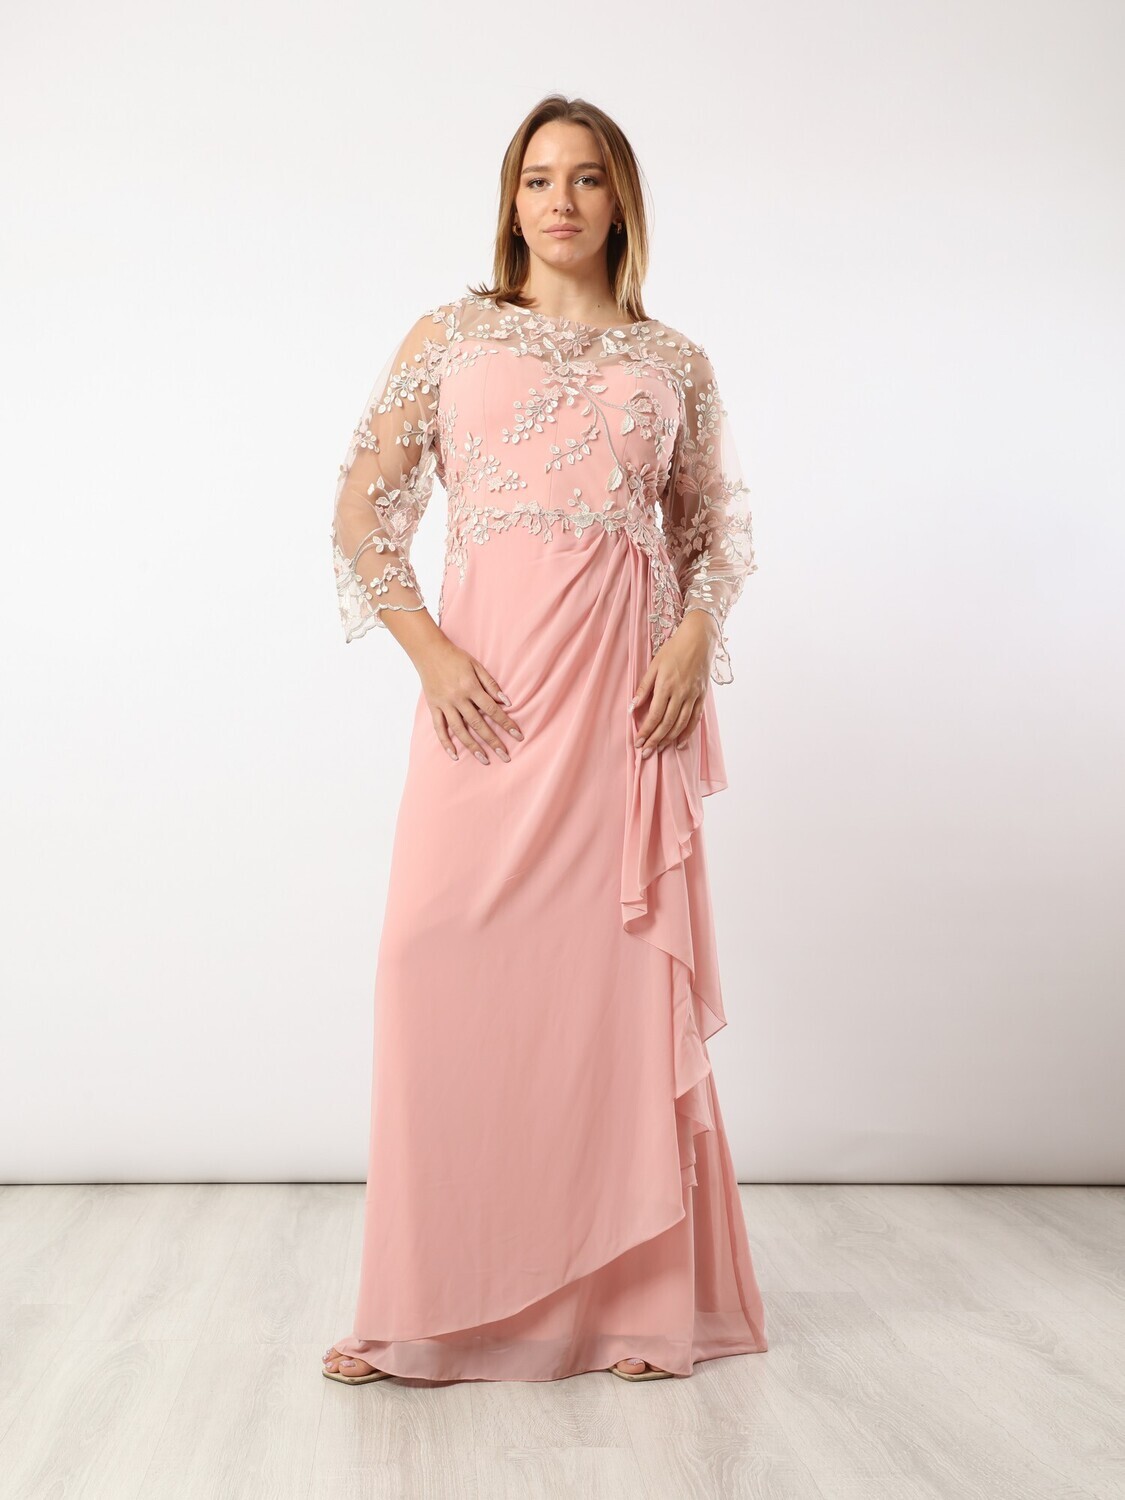 dress-floral-applique-side-ruffle-8606